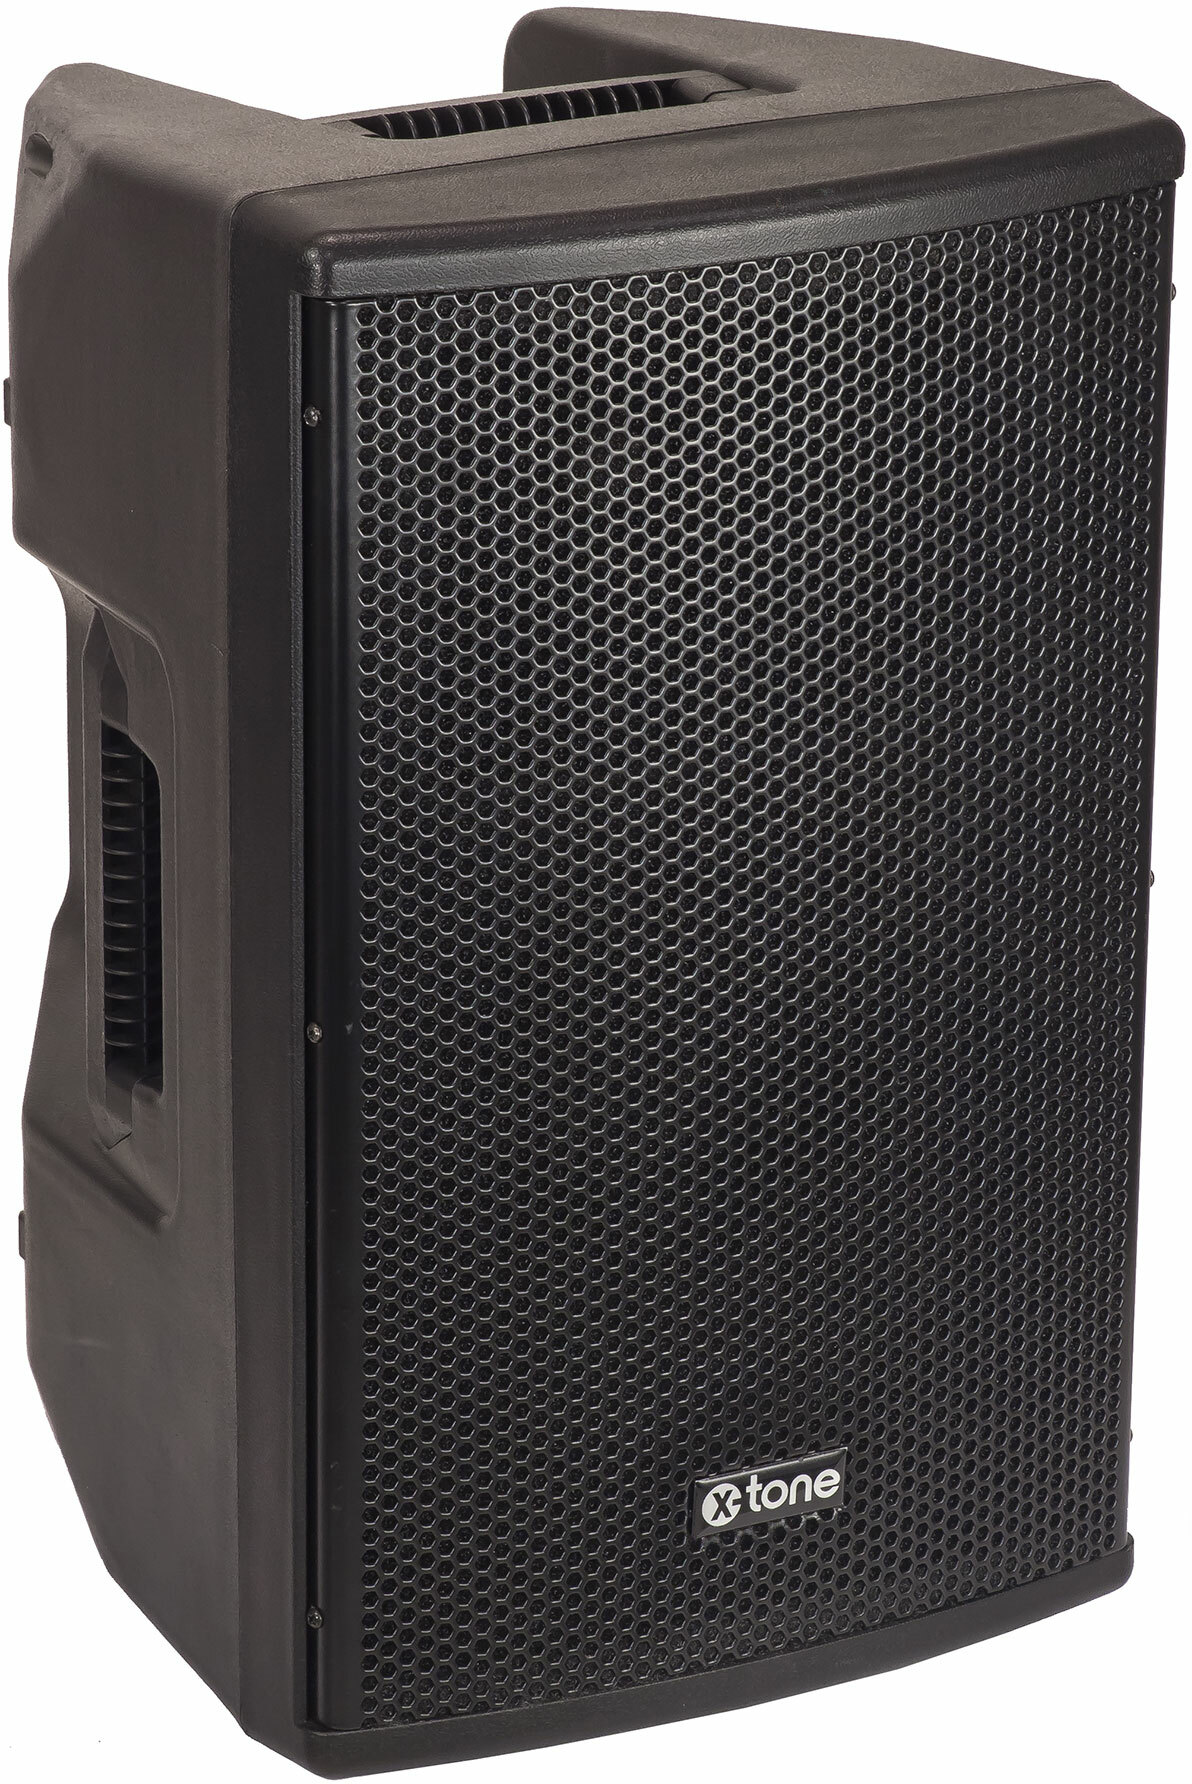 X-tone Xts-12 - Active full-range speaker - Main picture